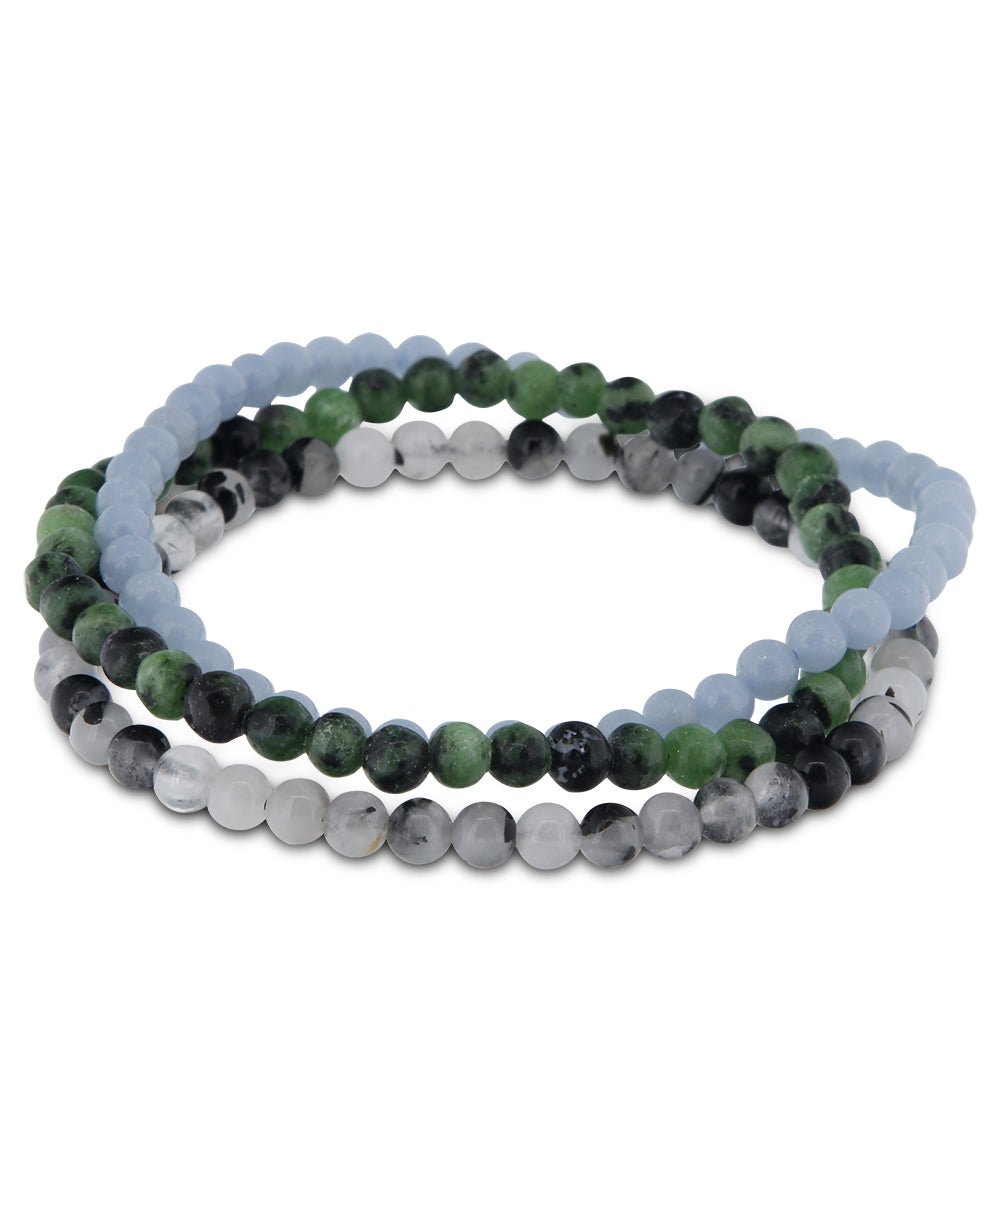 Energy Bracelets for Spiritual Intention, Set of 3 - Bracelets